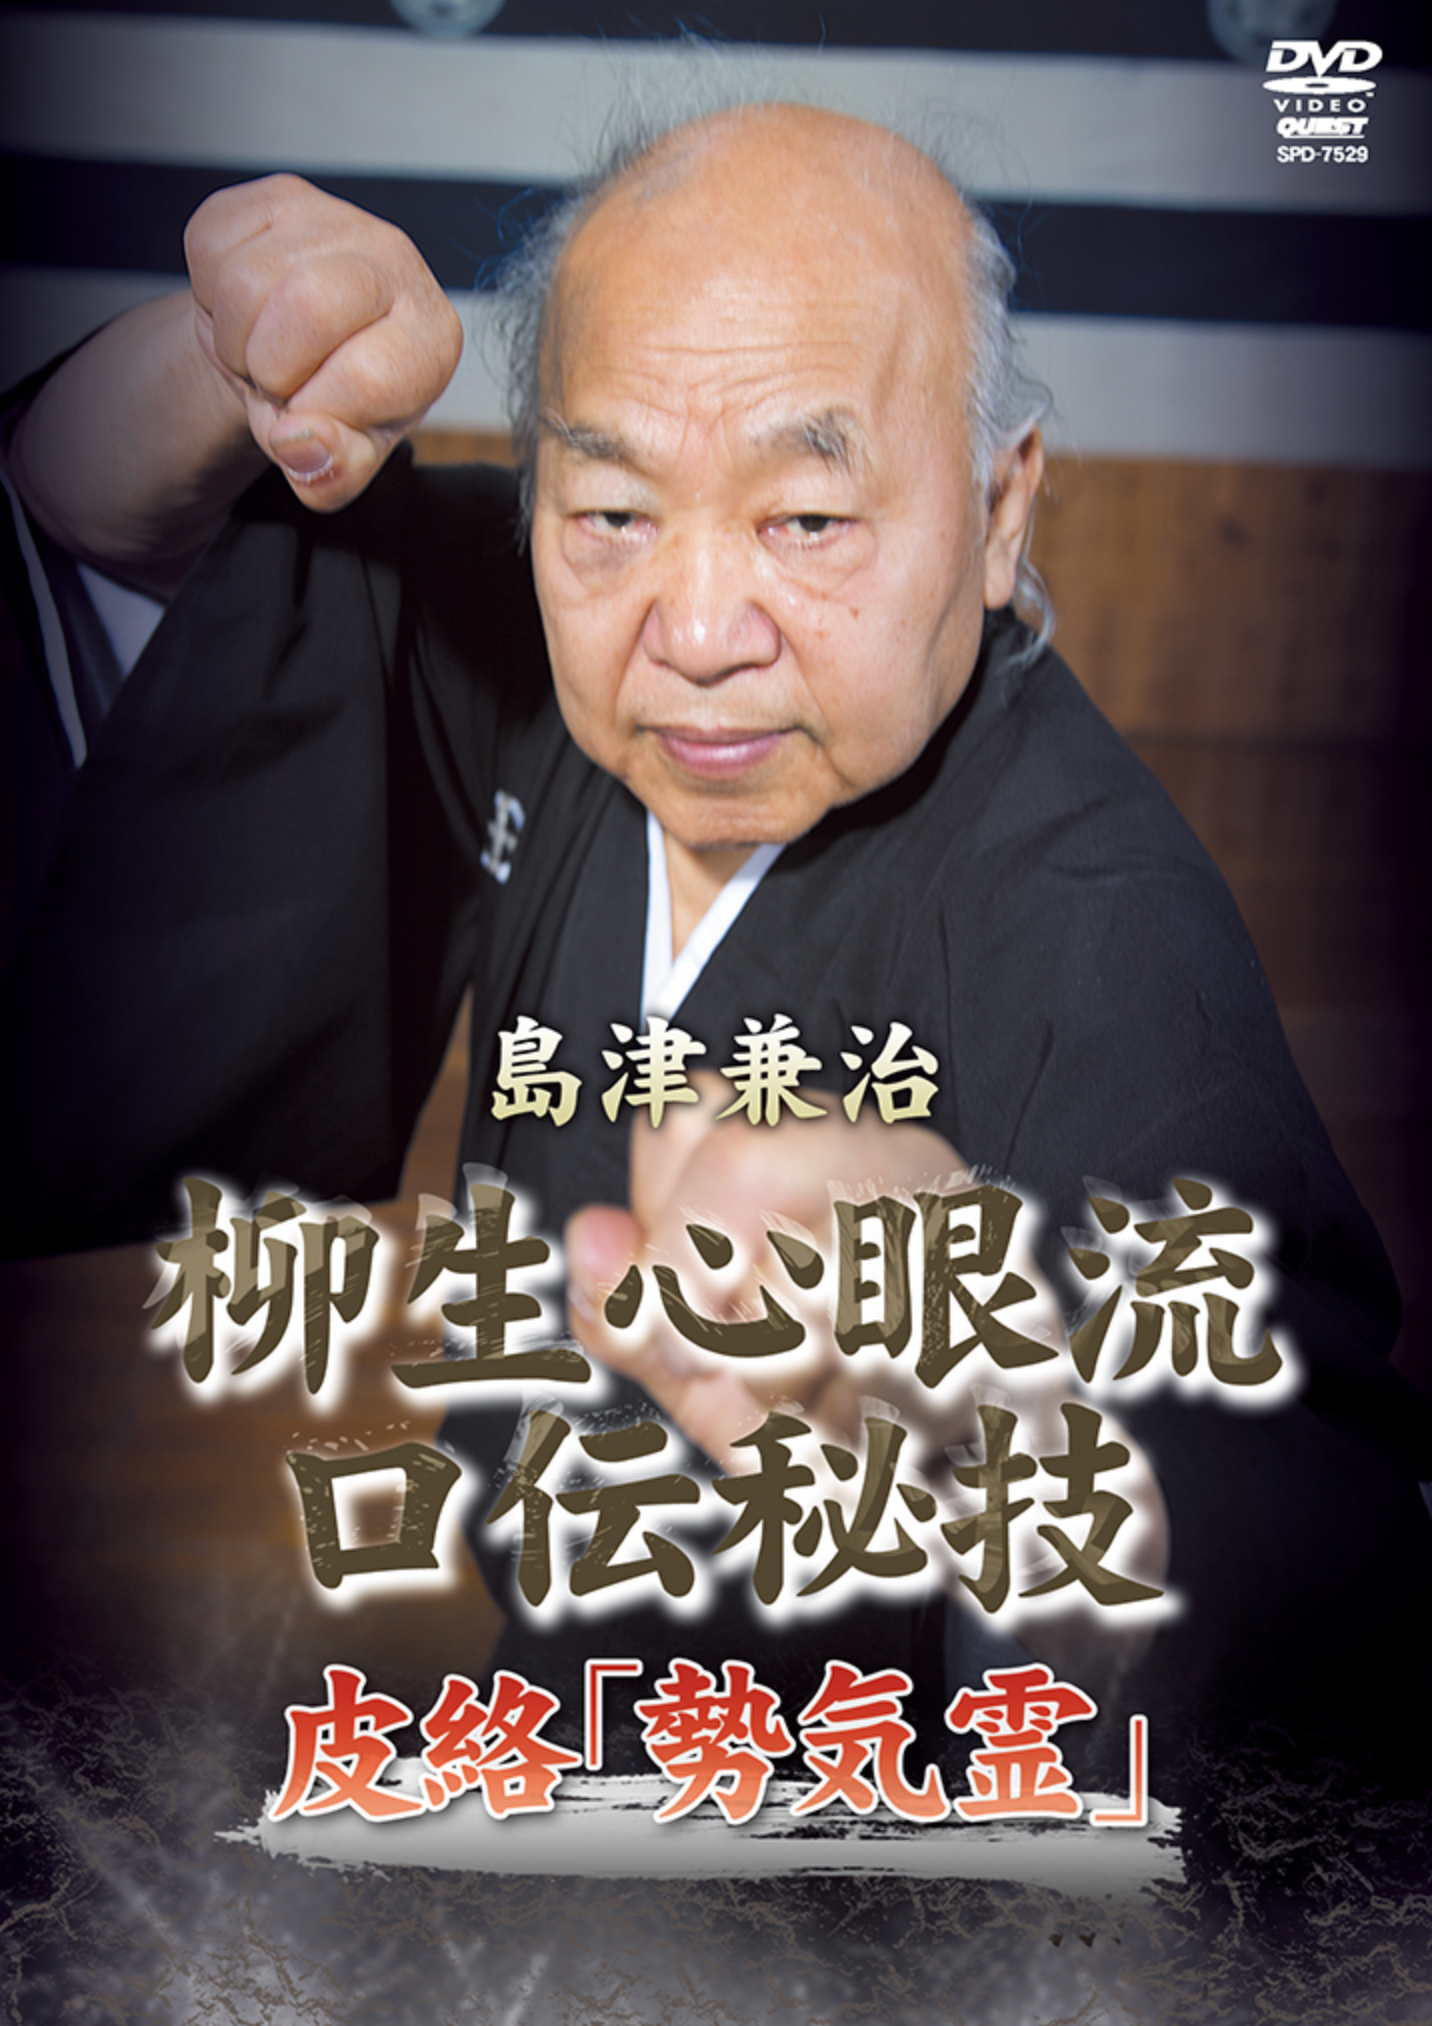 Yagyu Shingan Ryu Kuden Higi Vol 2 DVD by Kenji Shimazu - Budovideos Inc